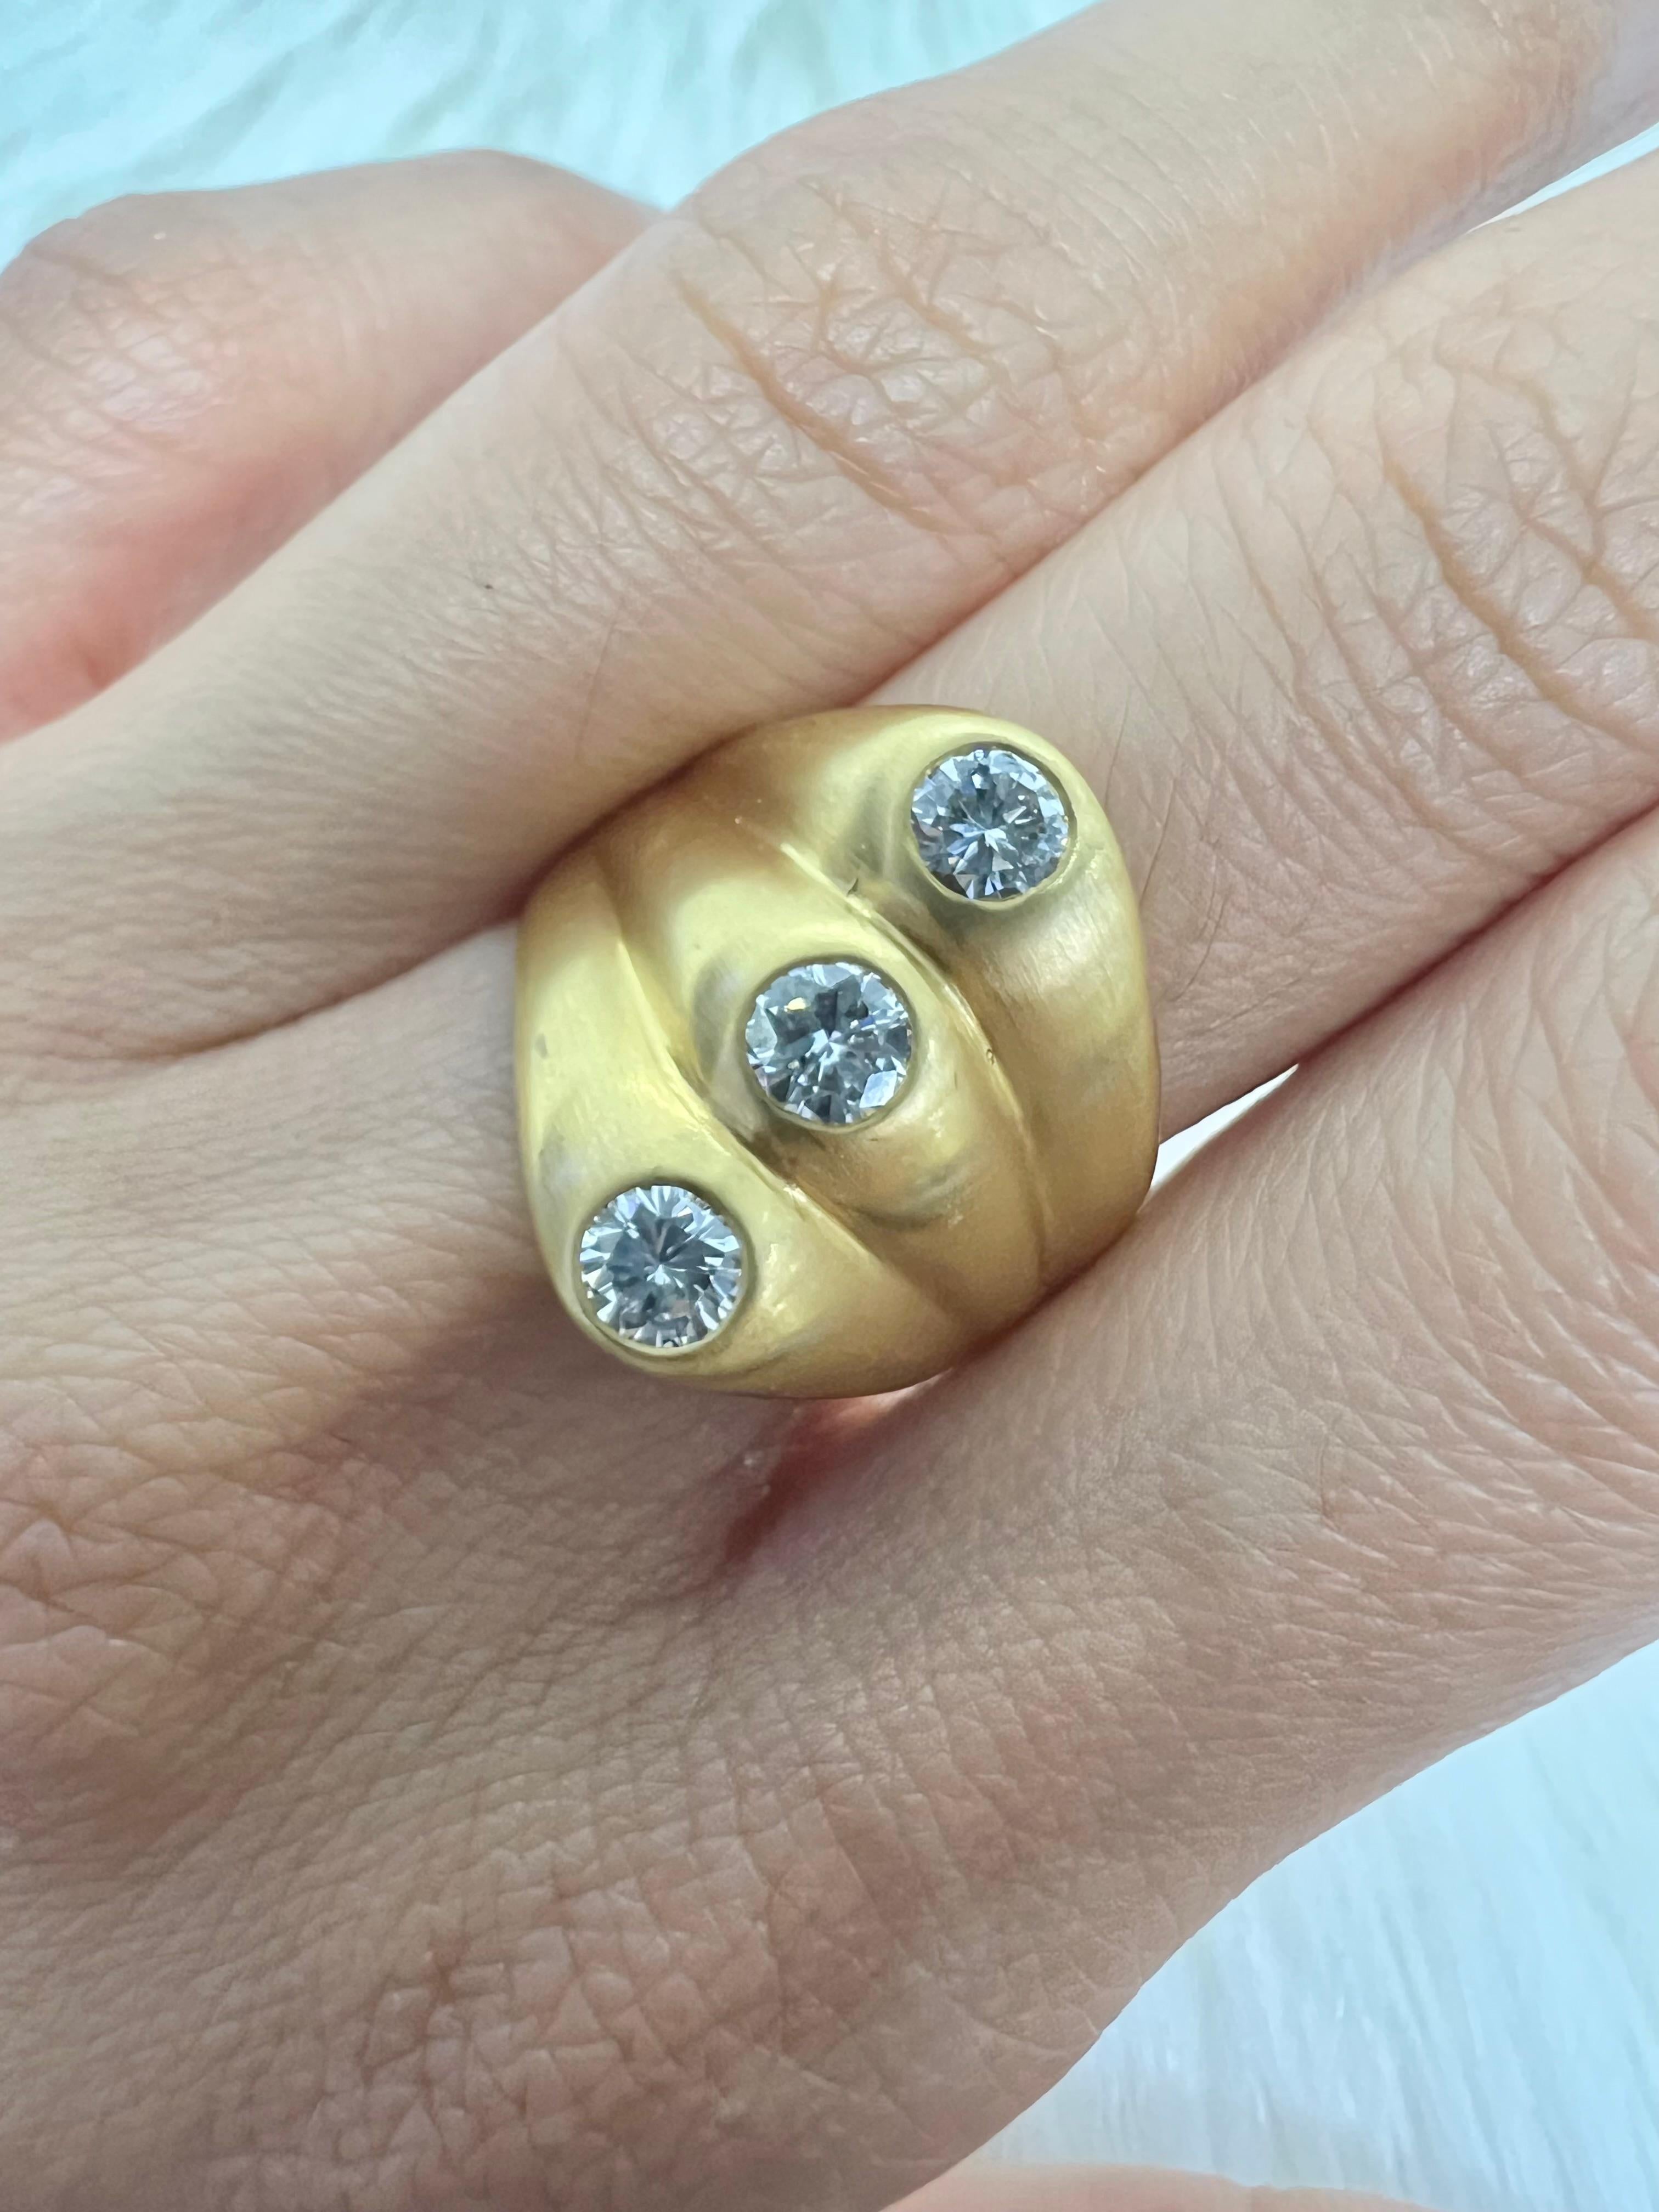 Round Cut Sophia D. 18K Yellow Gold Diamond Ring For Sale